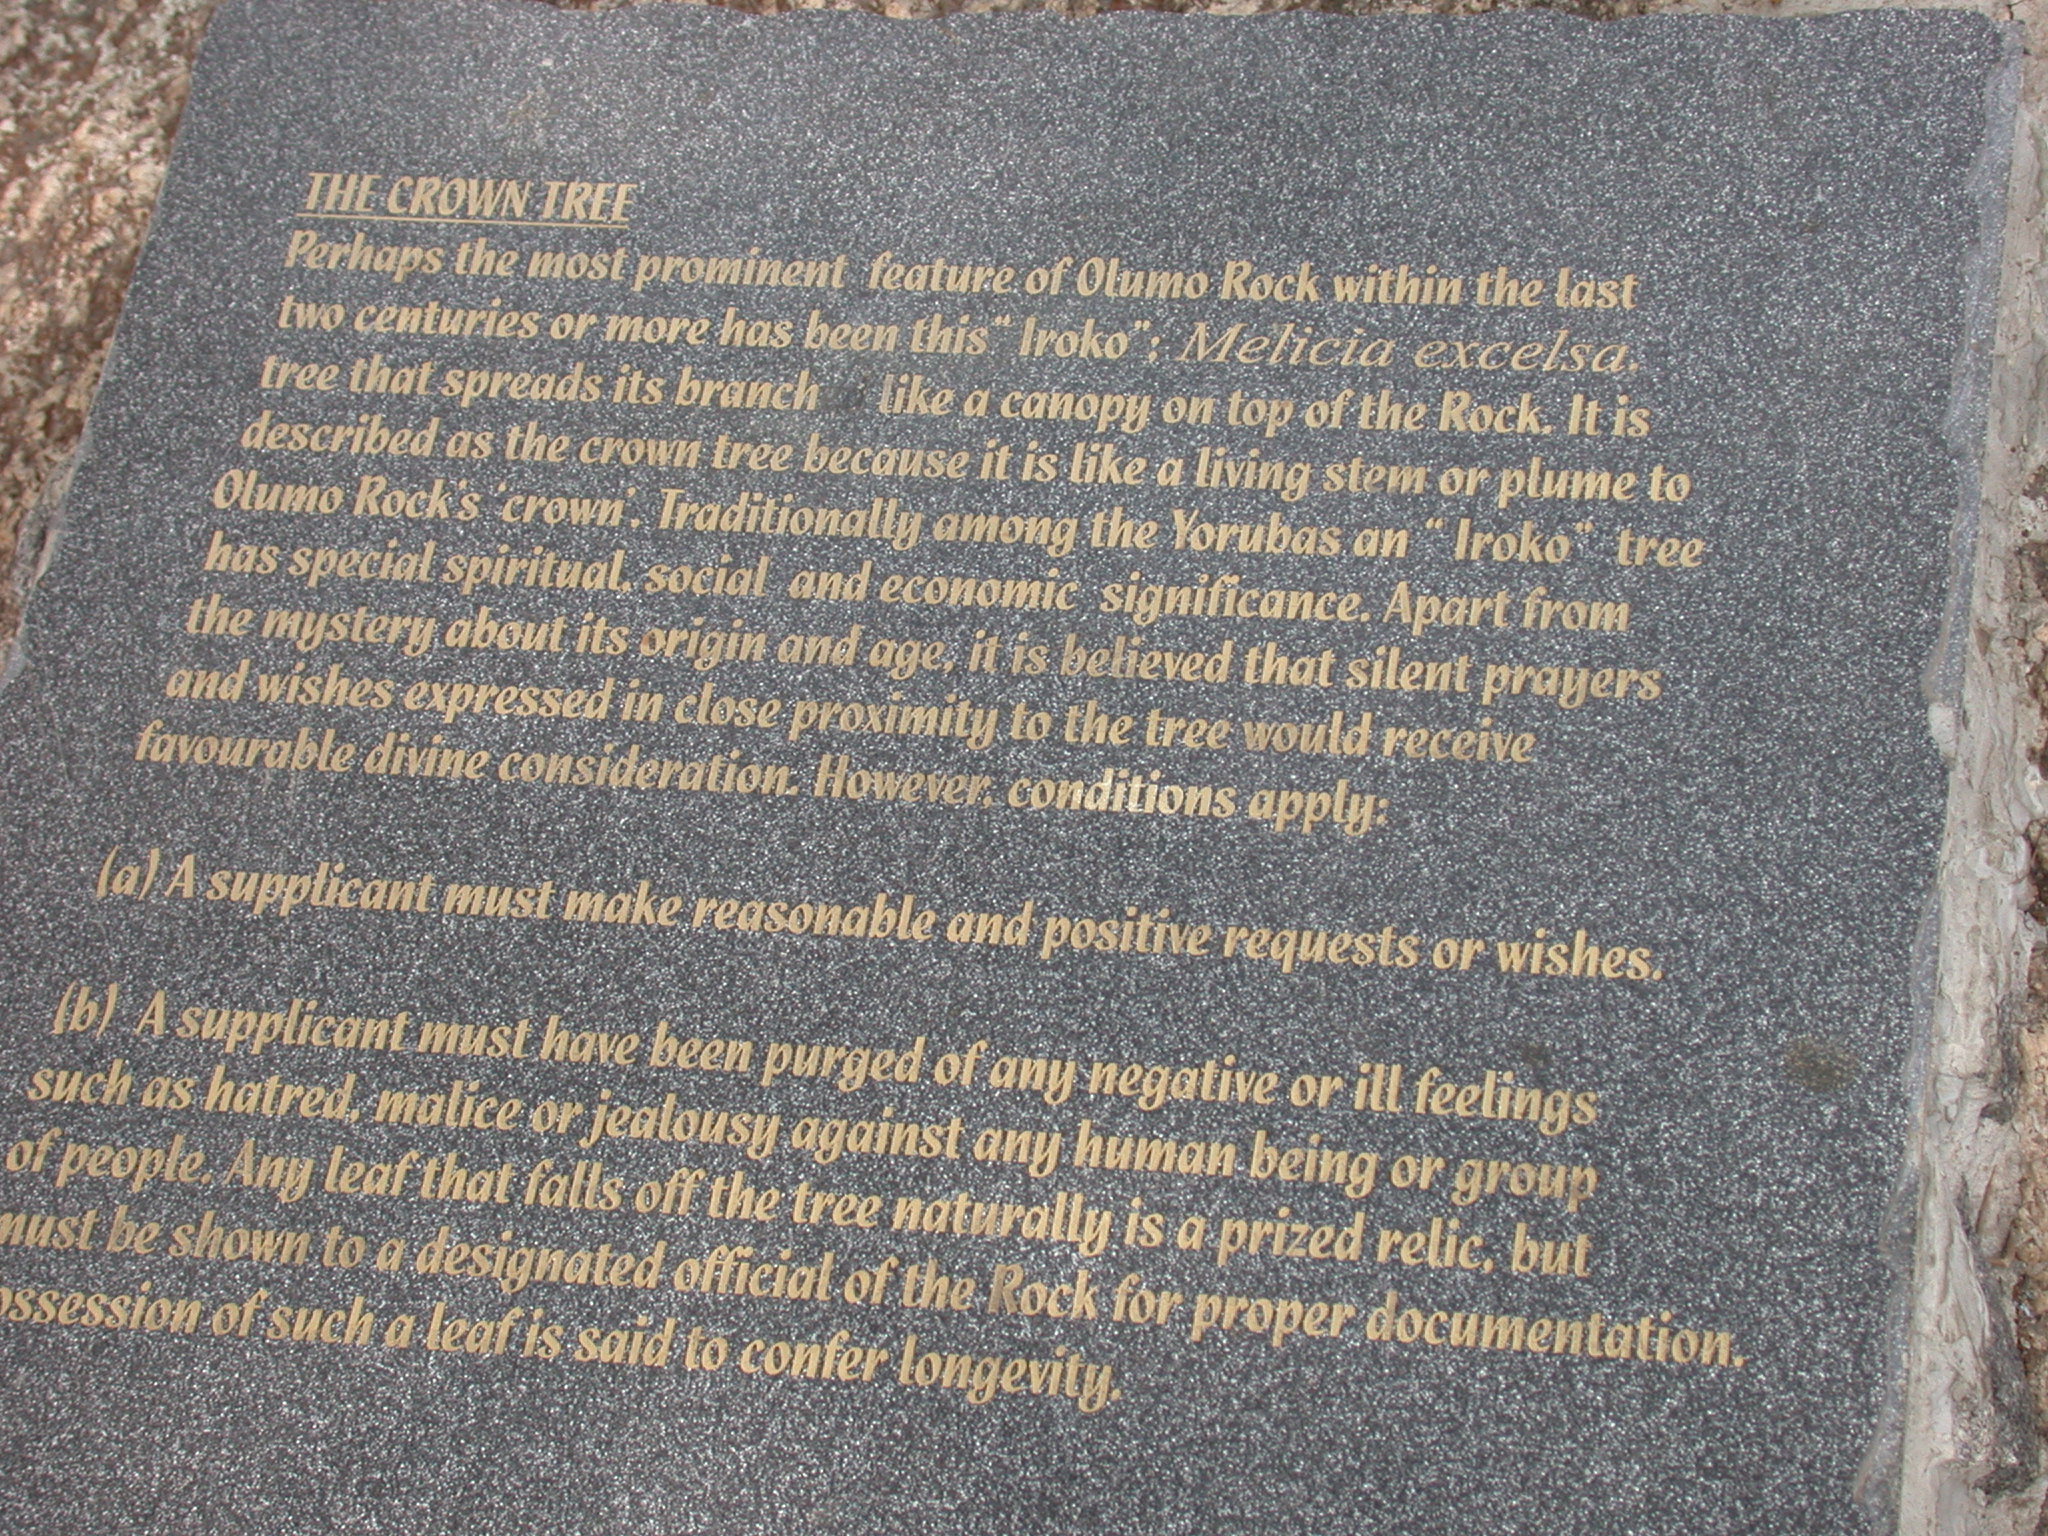 Sign for Iroko Crown Tree on Summit, Olumo Rock, Abeokuta, Nigeria